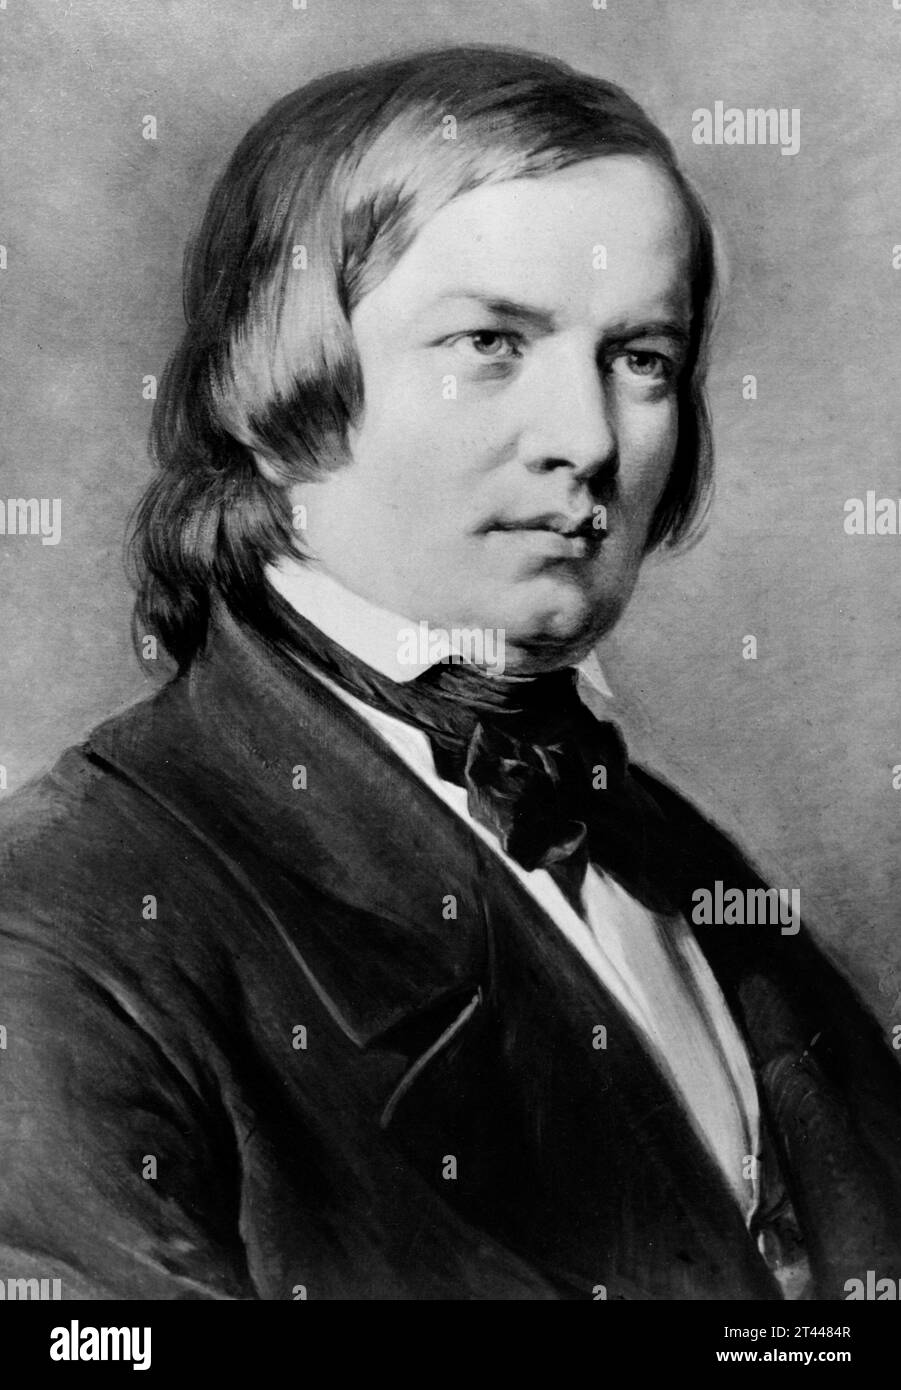 Robert Schumann. Portrait du compositeur et pianiste allemand Robert Schumann (1810-1856) en 1839 Banque D'Images